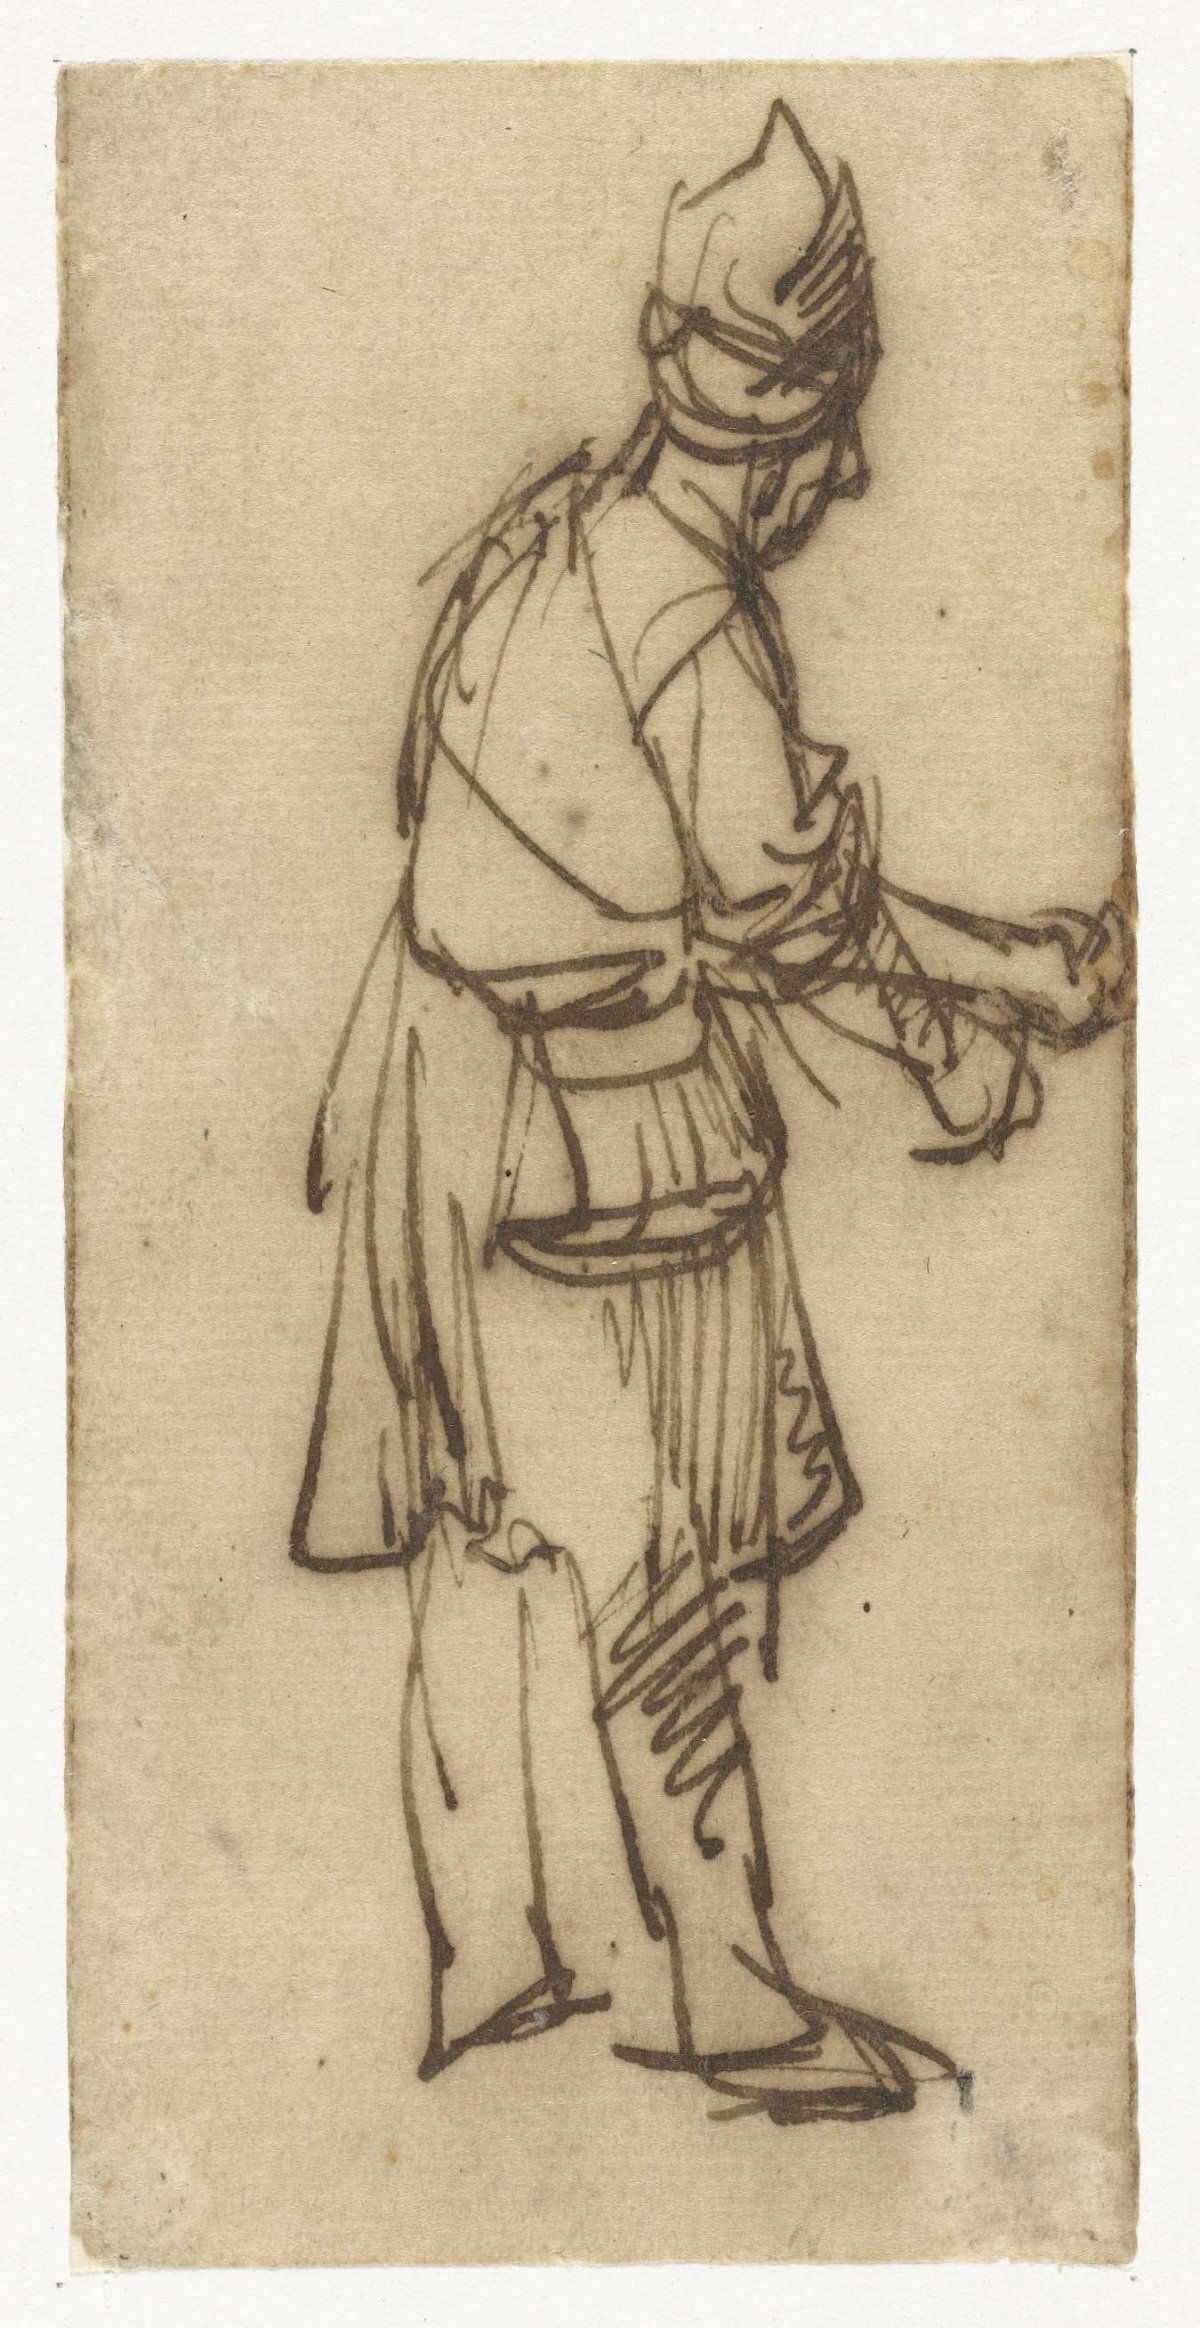 Standing Man with Outstretched Arm, Rembrandt van Rijn, c. 1636 - c. 1641